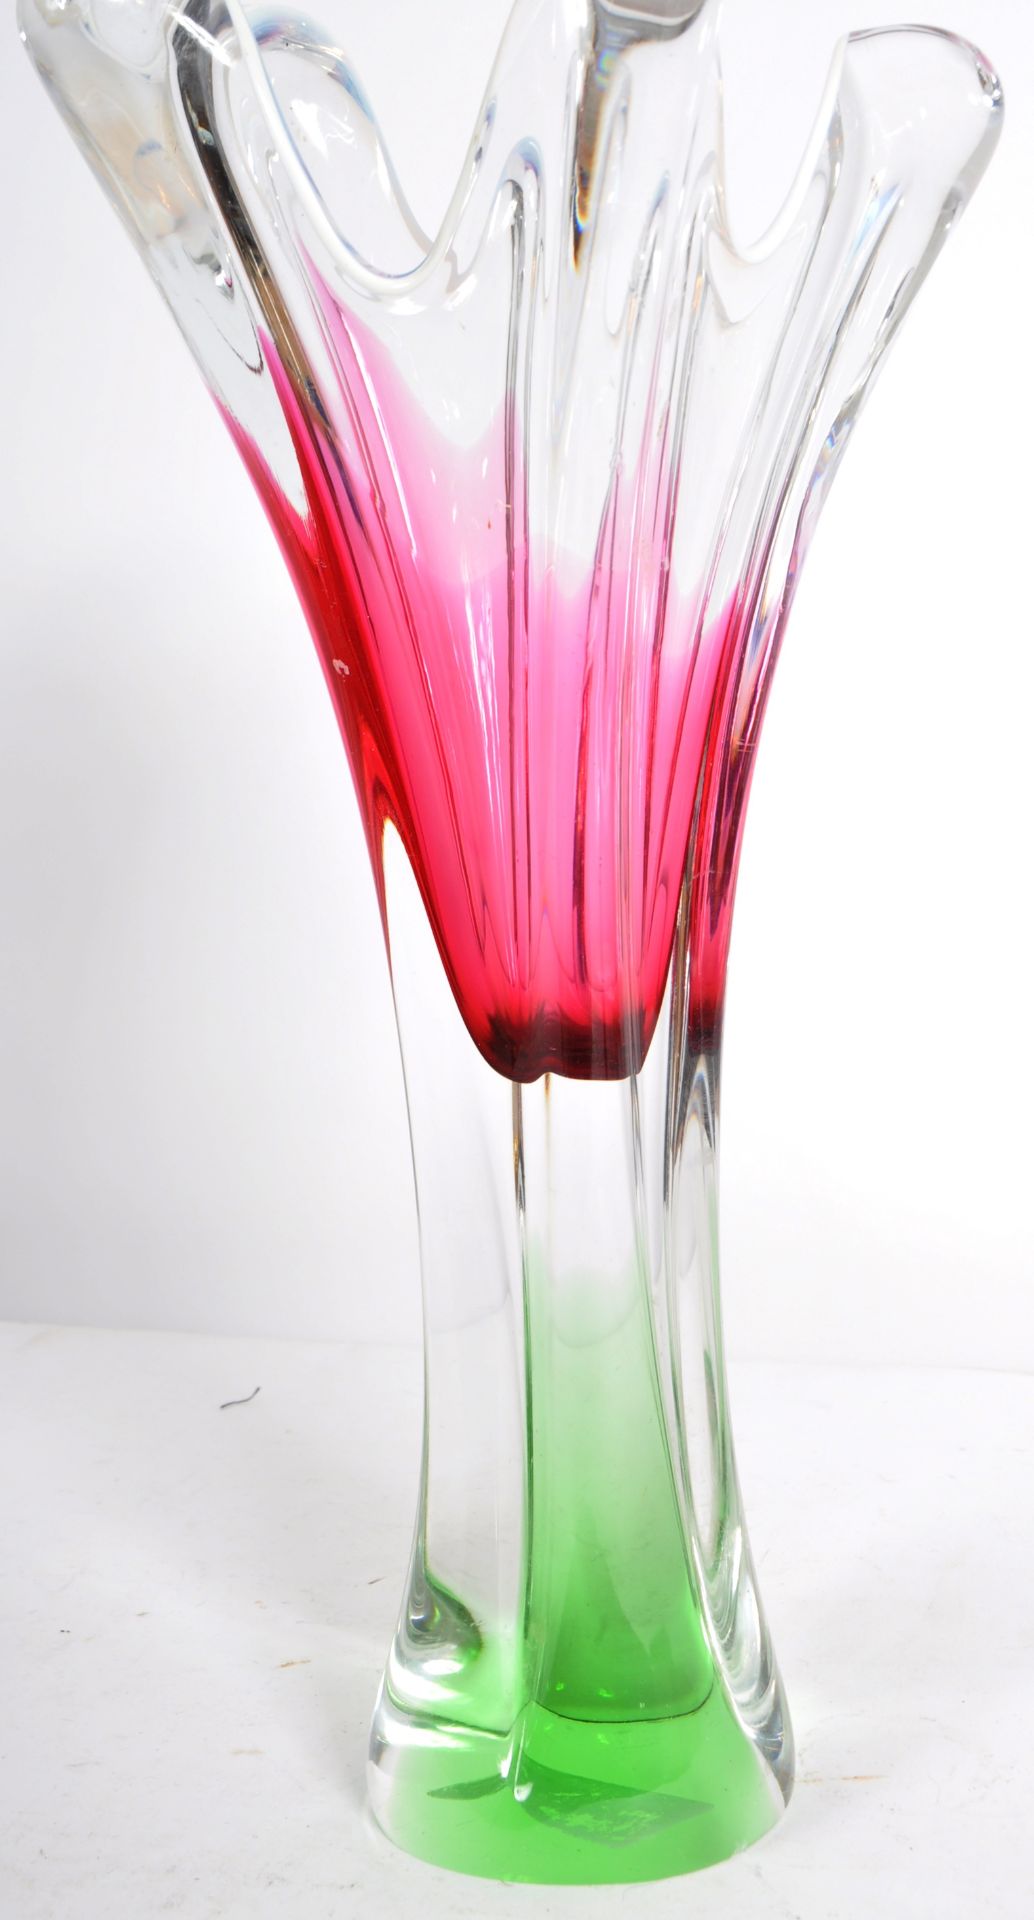 HOSPODKA FOR SKLO UNION - RETRO STUDIO ART GLASS VASE - Image 6 of 9